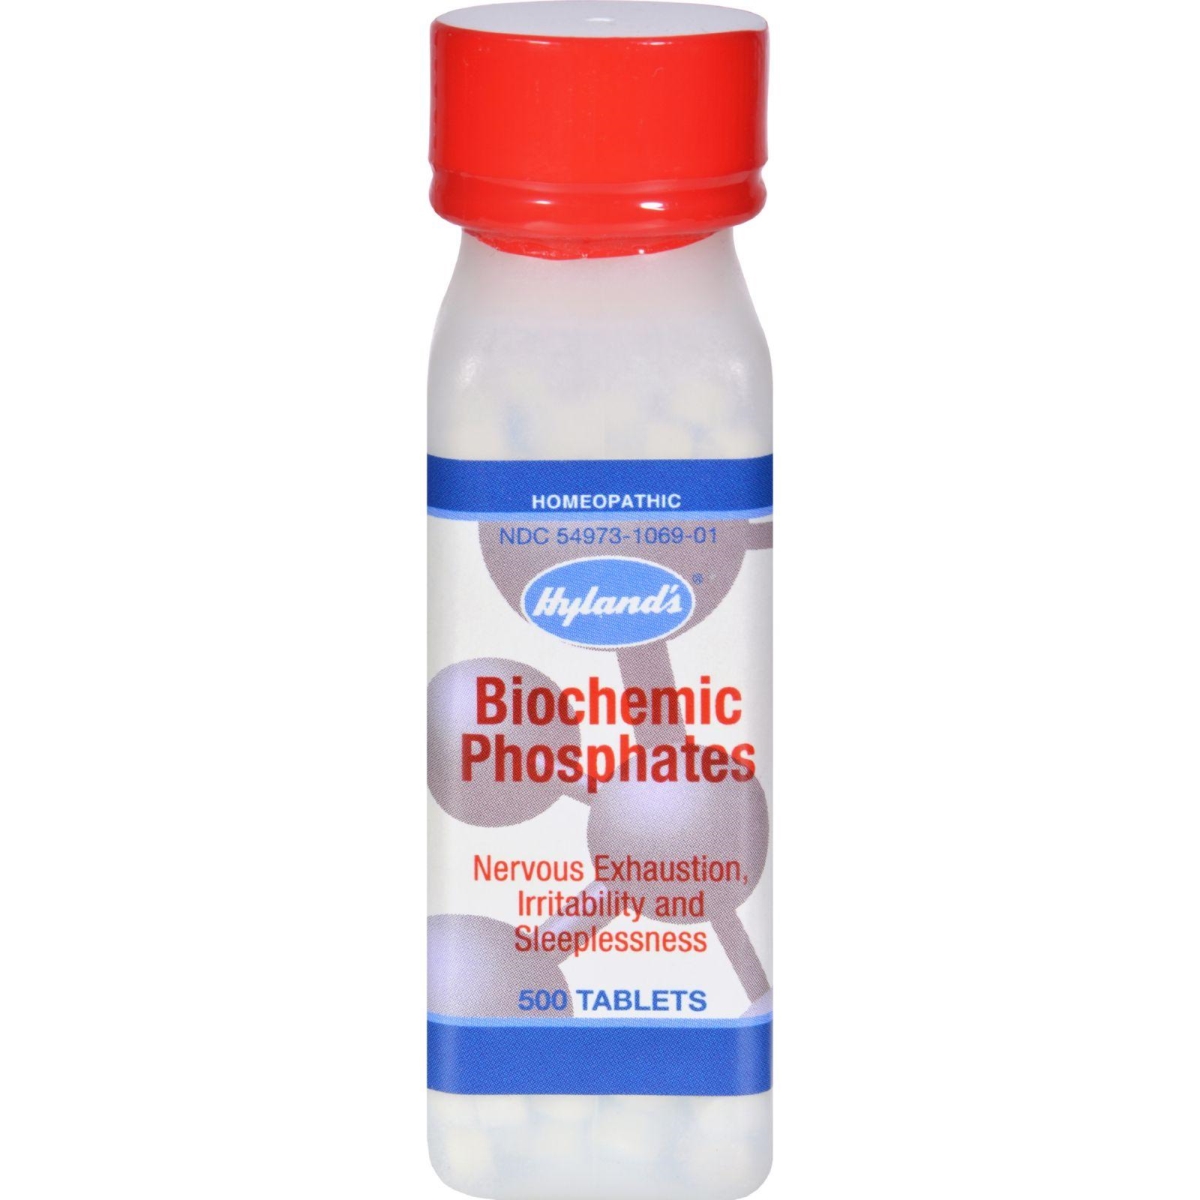 Hg0130880 Biochemic Phosphates, 500 Tablets